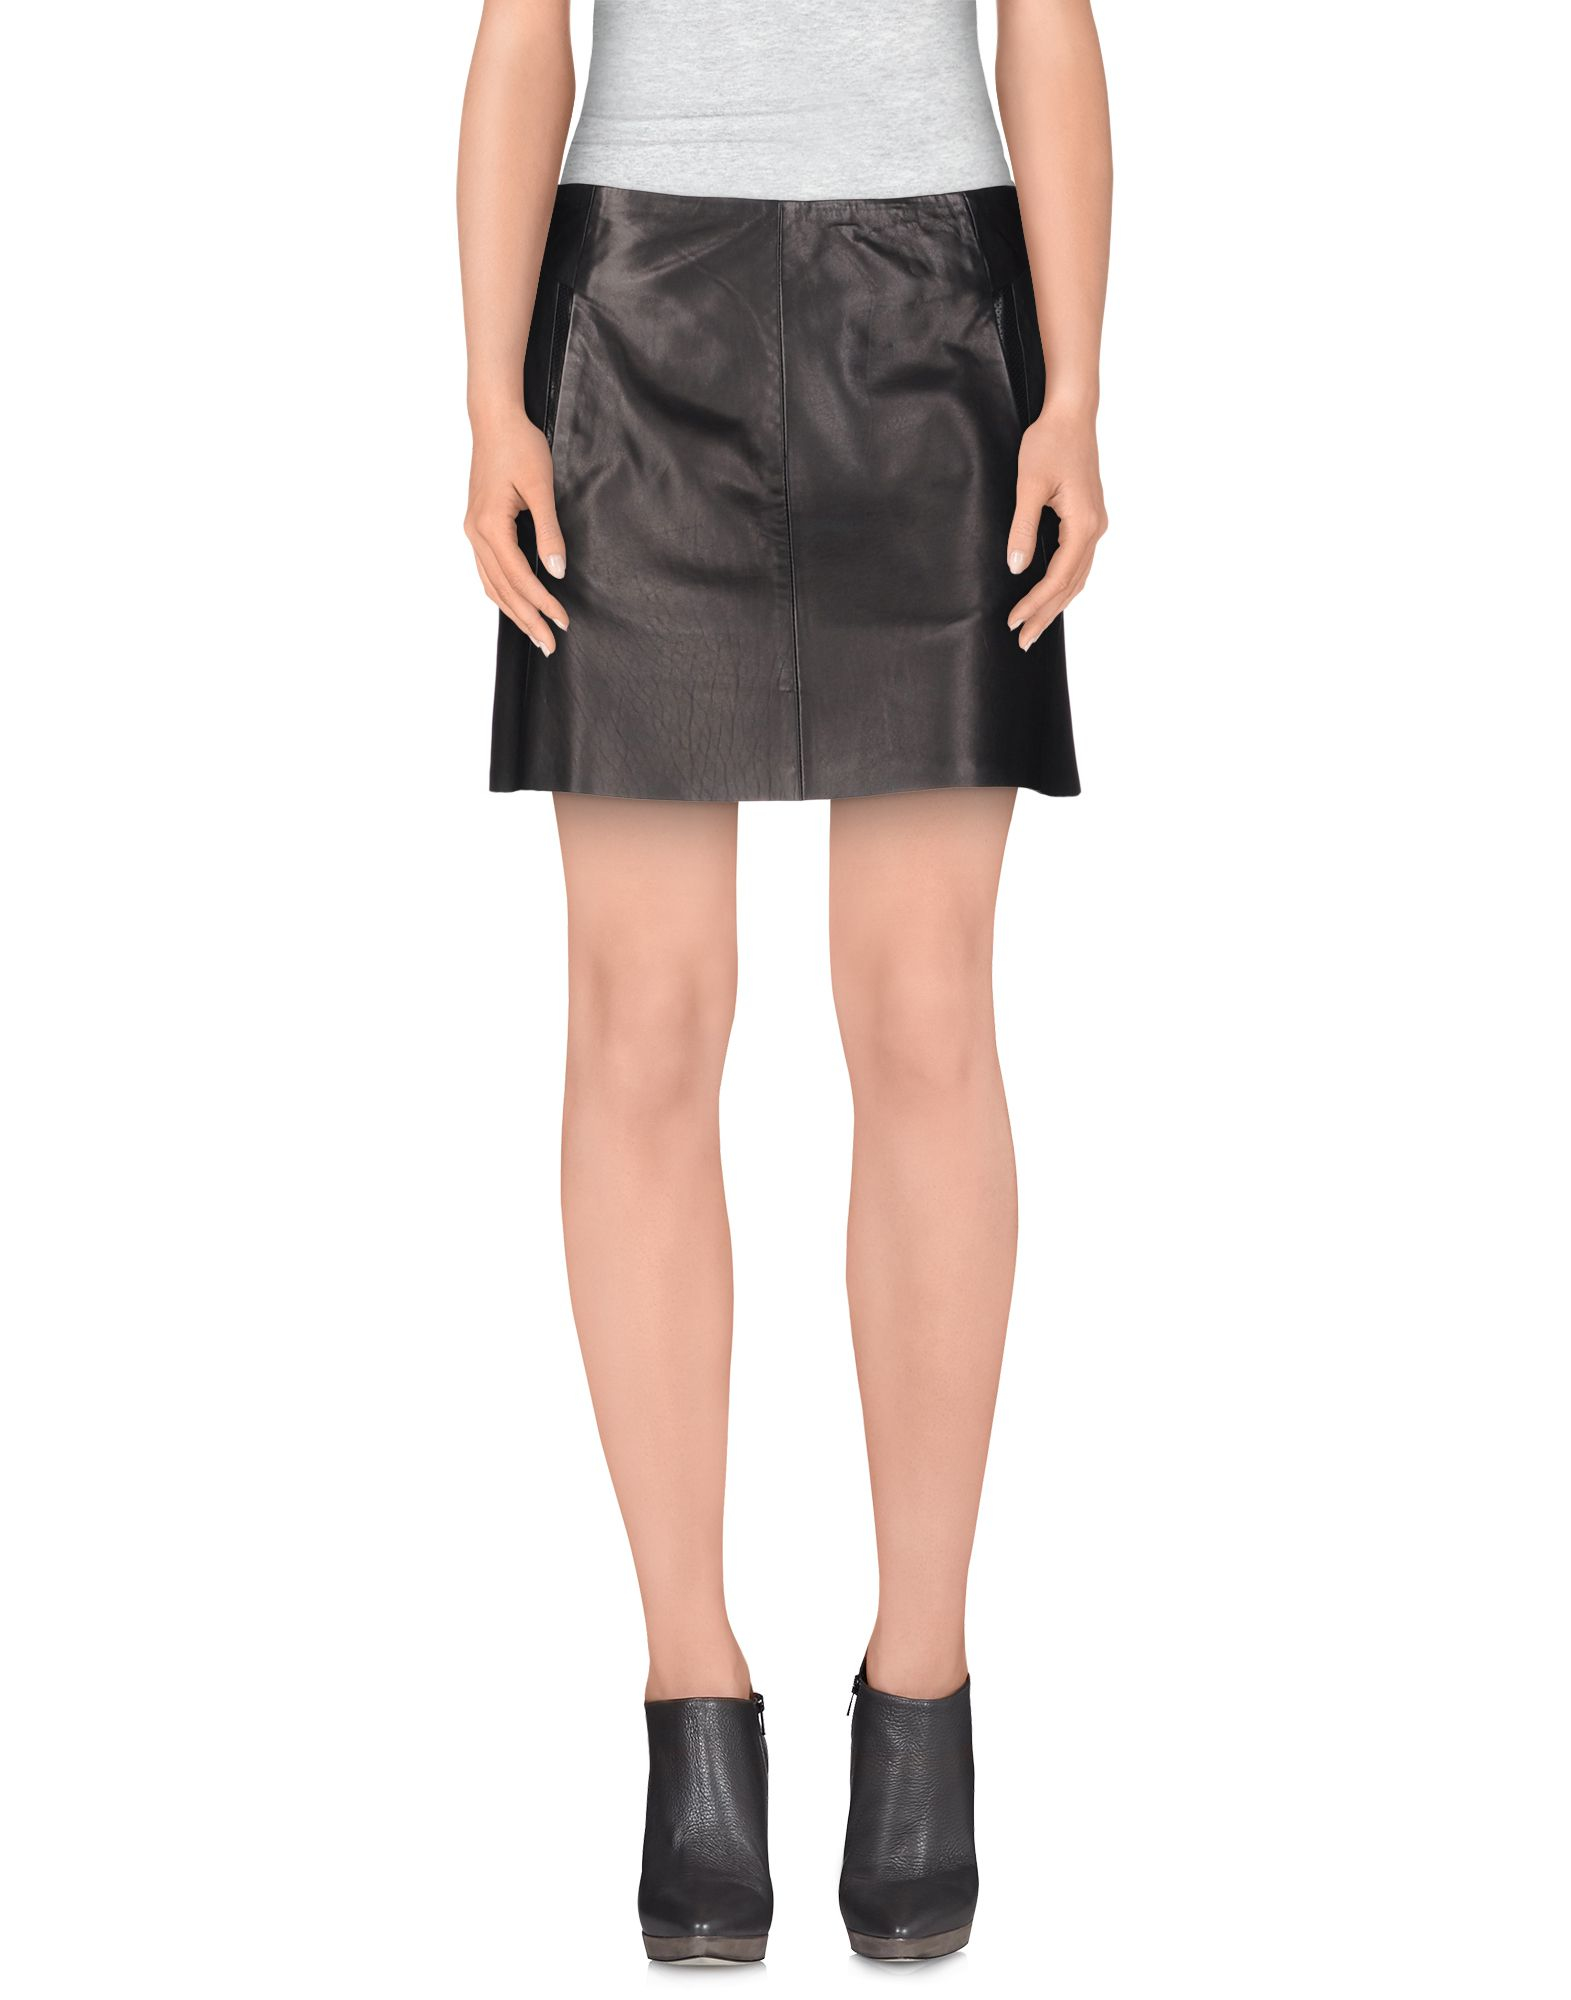 Lyst - Rag & Bone Mini Skirt in Black